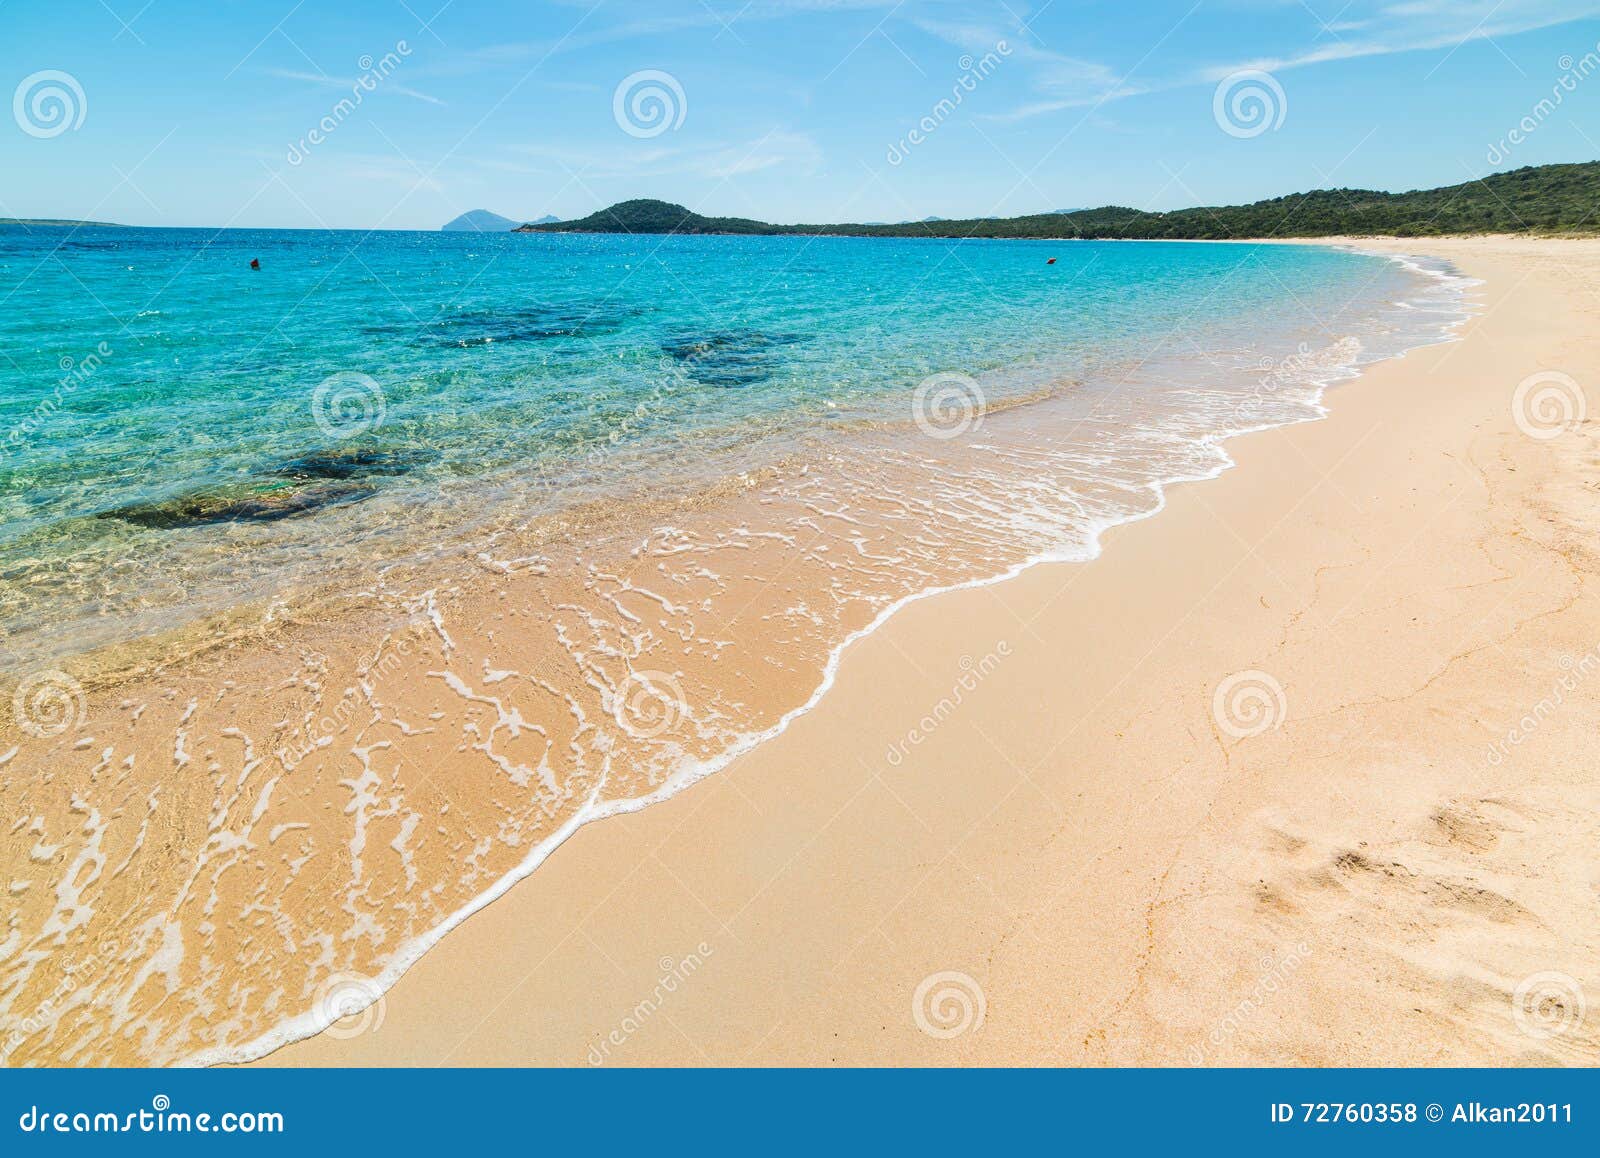 golden sand in liscia ruja beach